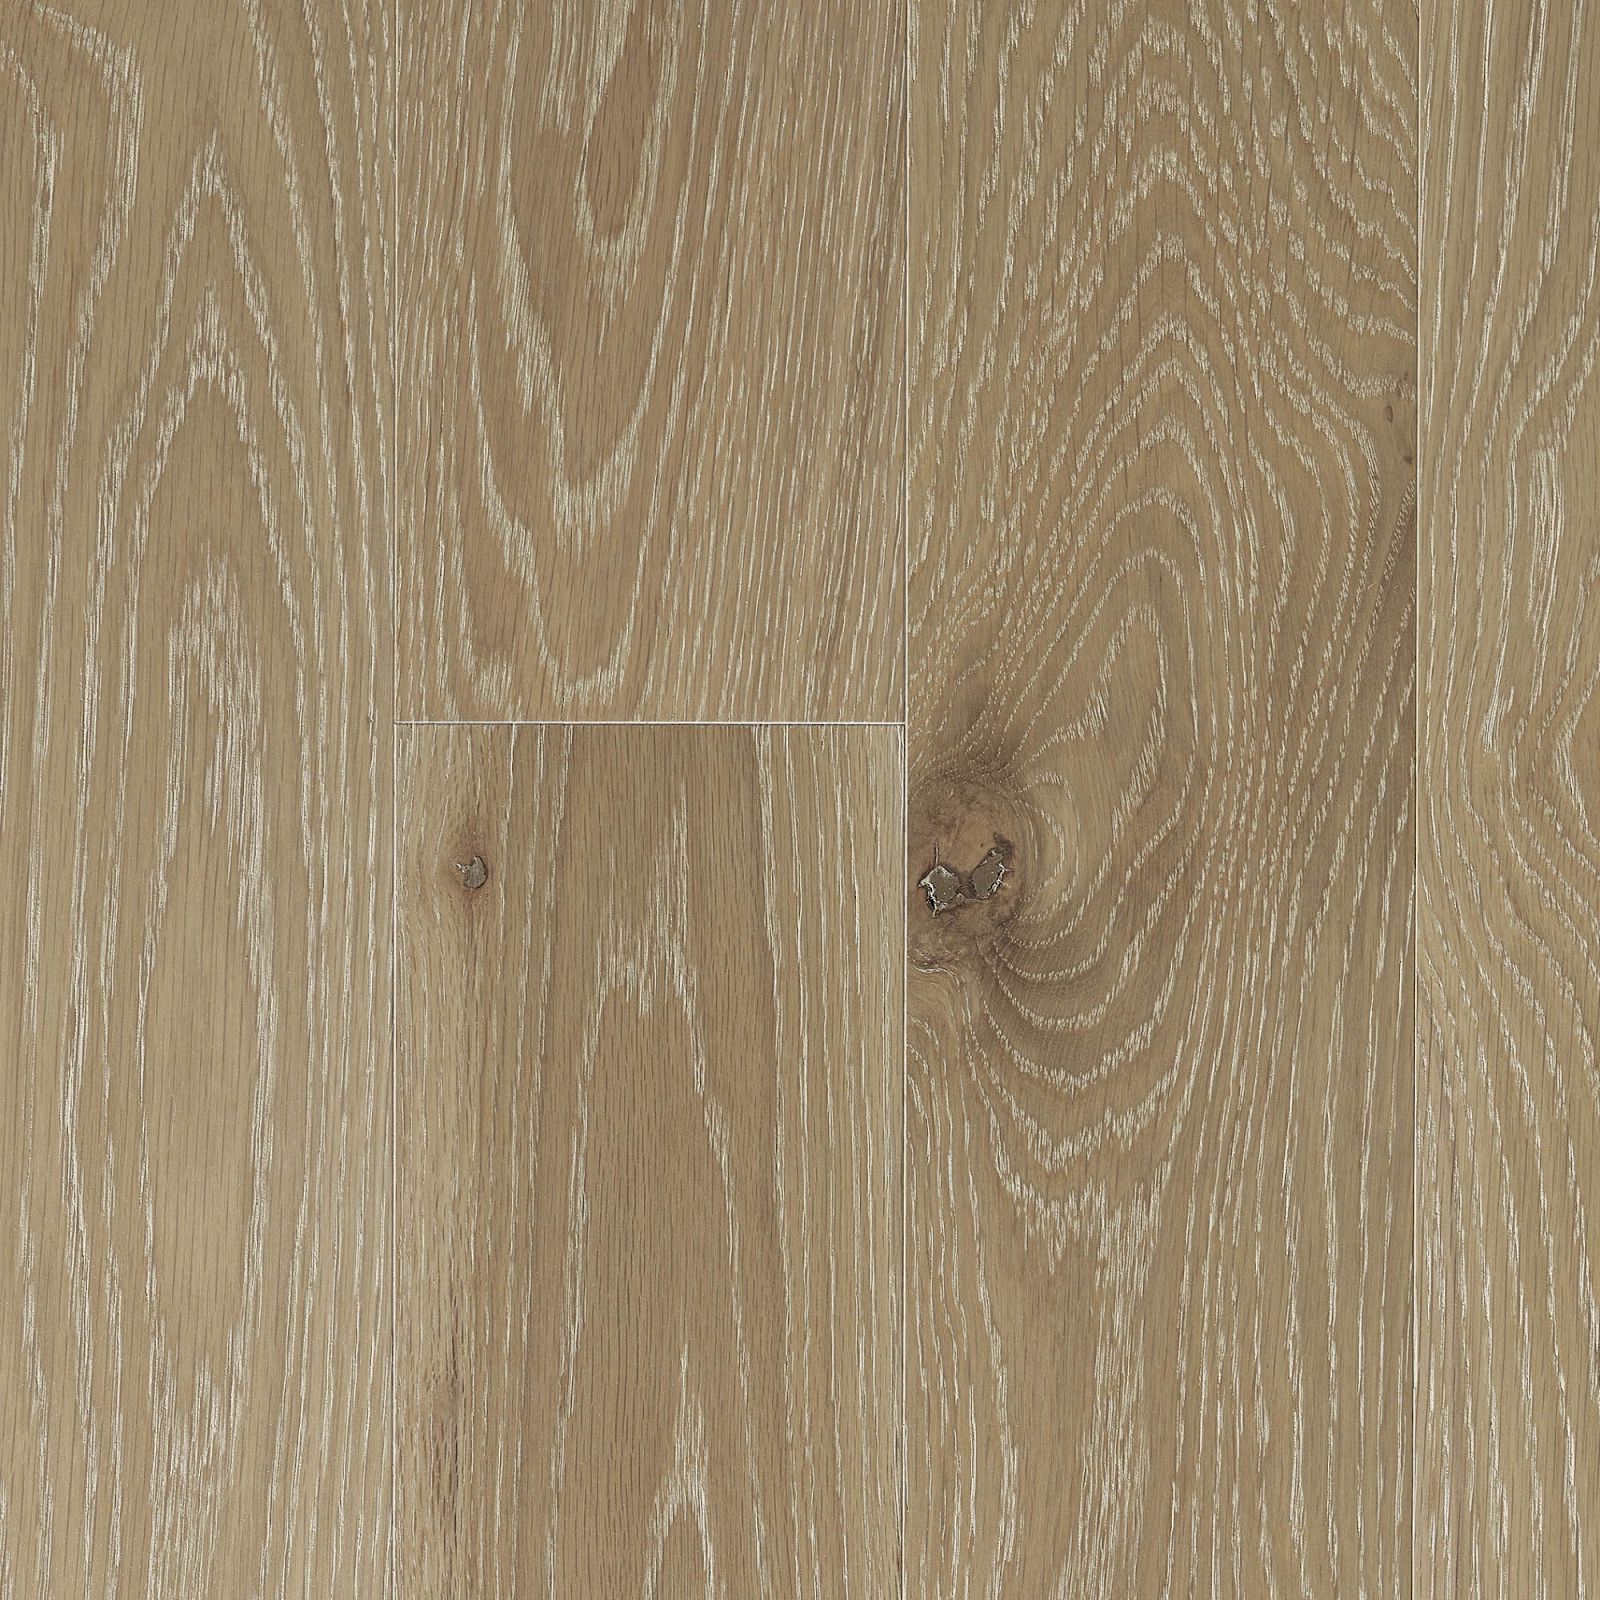 Hardwood flooring | Floorscapes